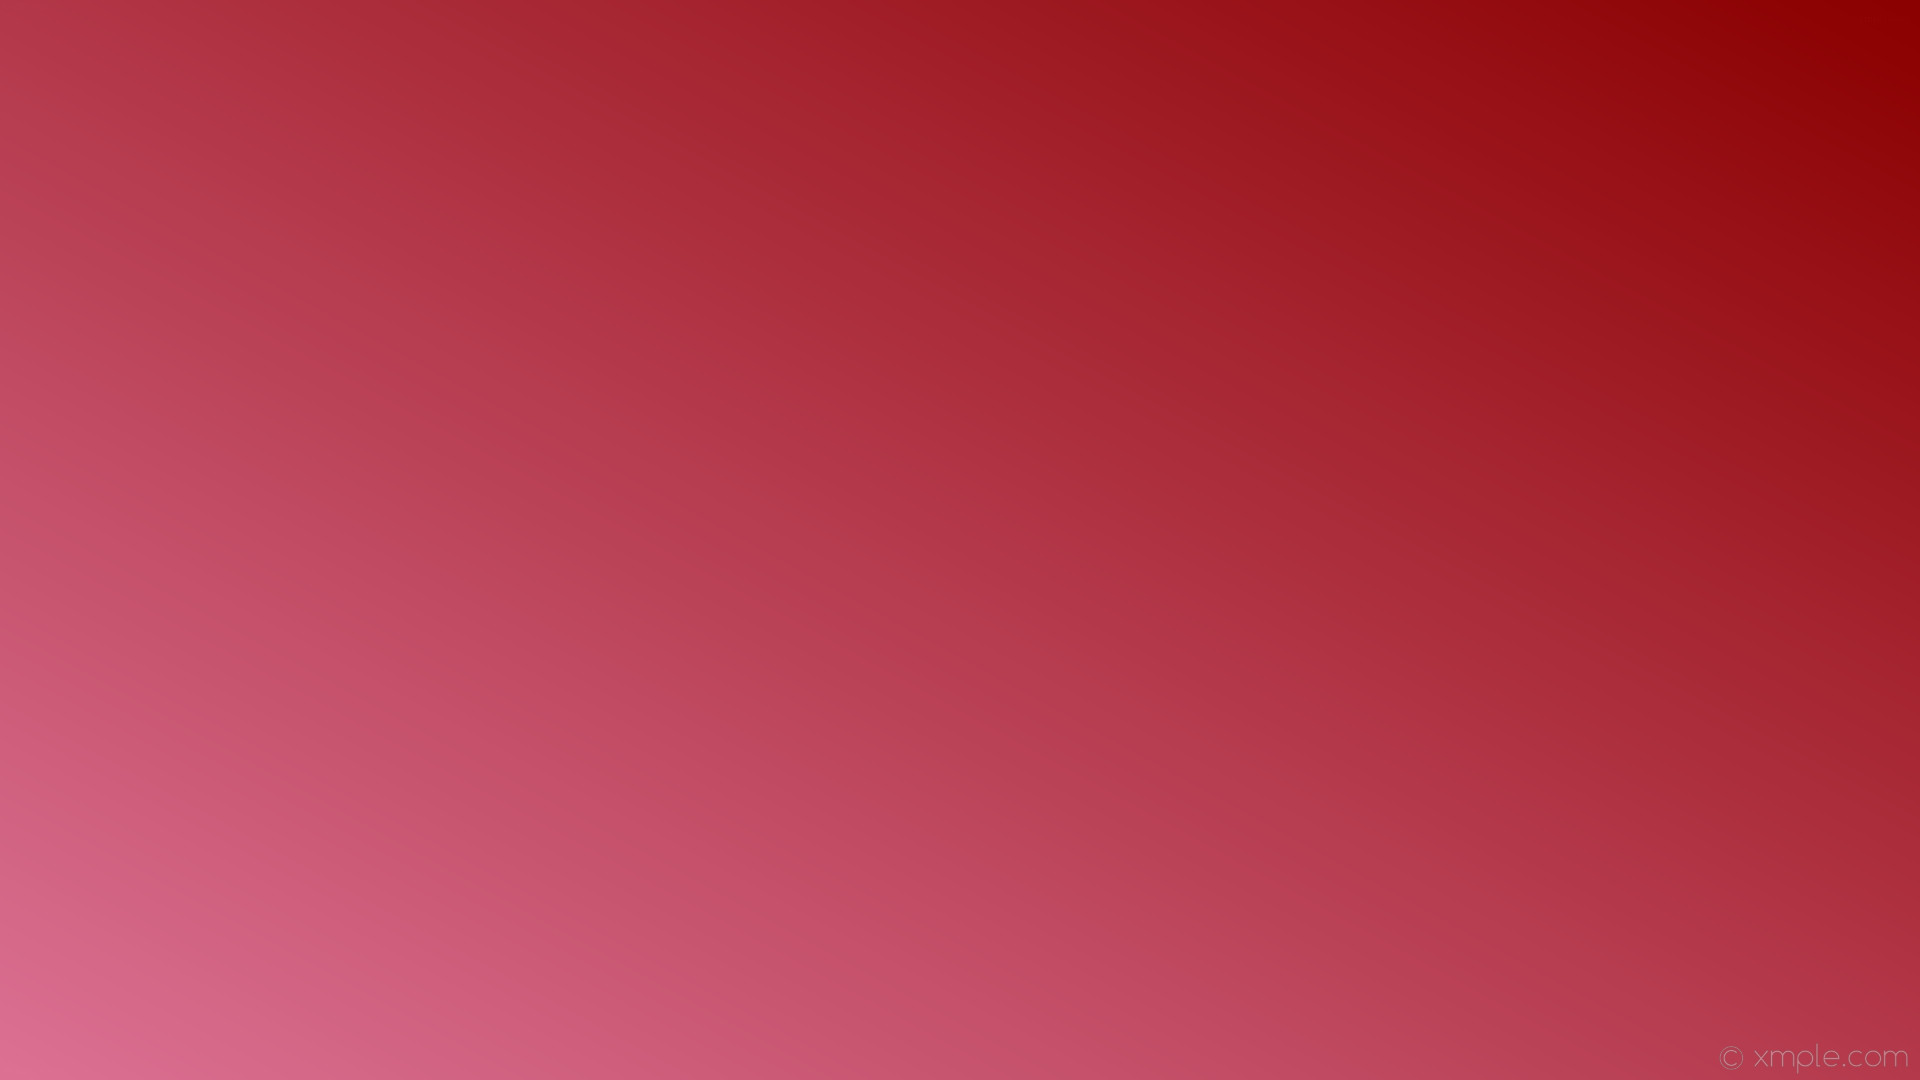 1920x1080 wallpaper pink linear red gradient pale violet red dark red #db7093 #8b0000  210Â°